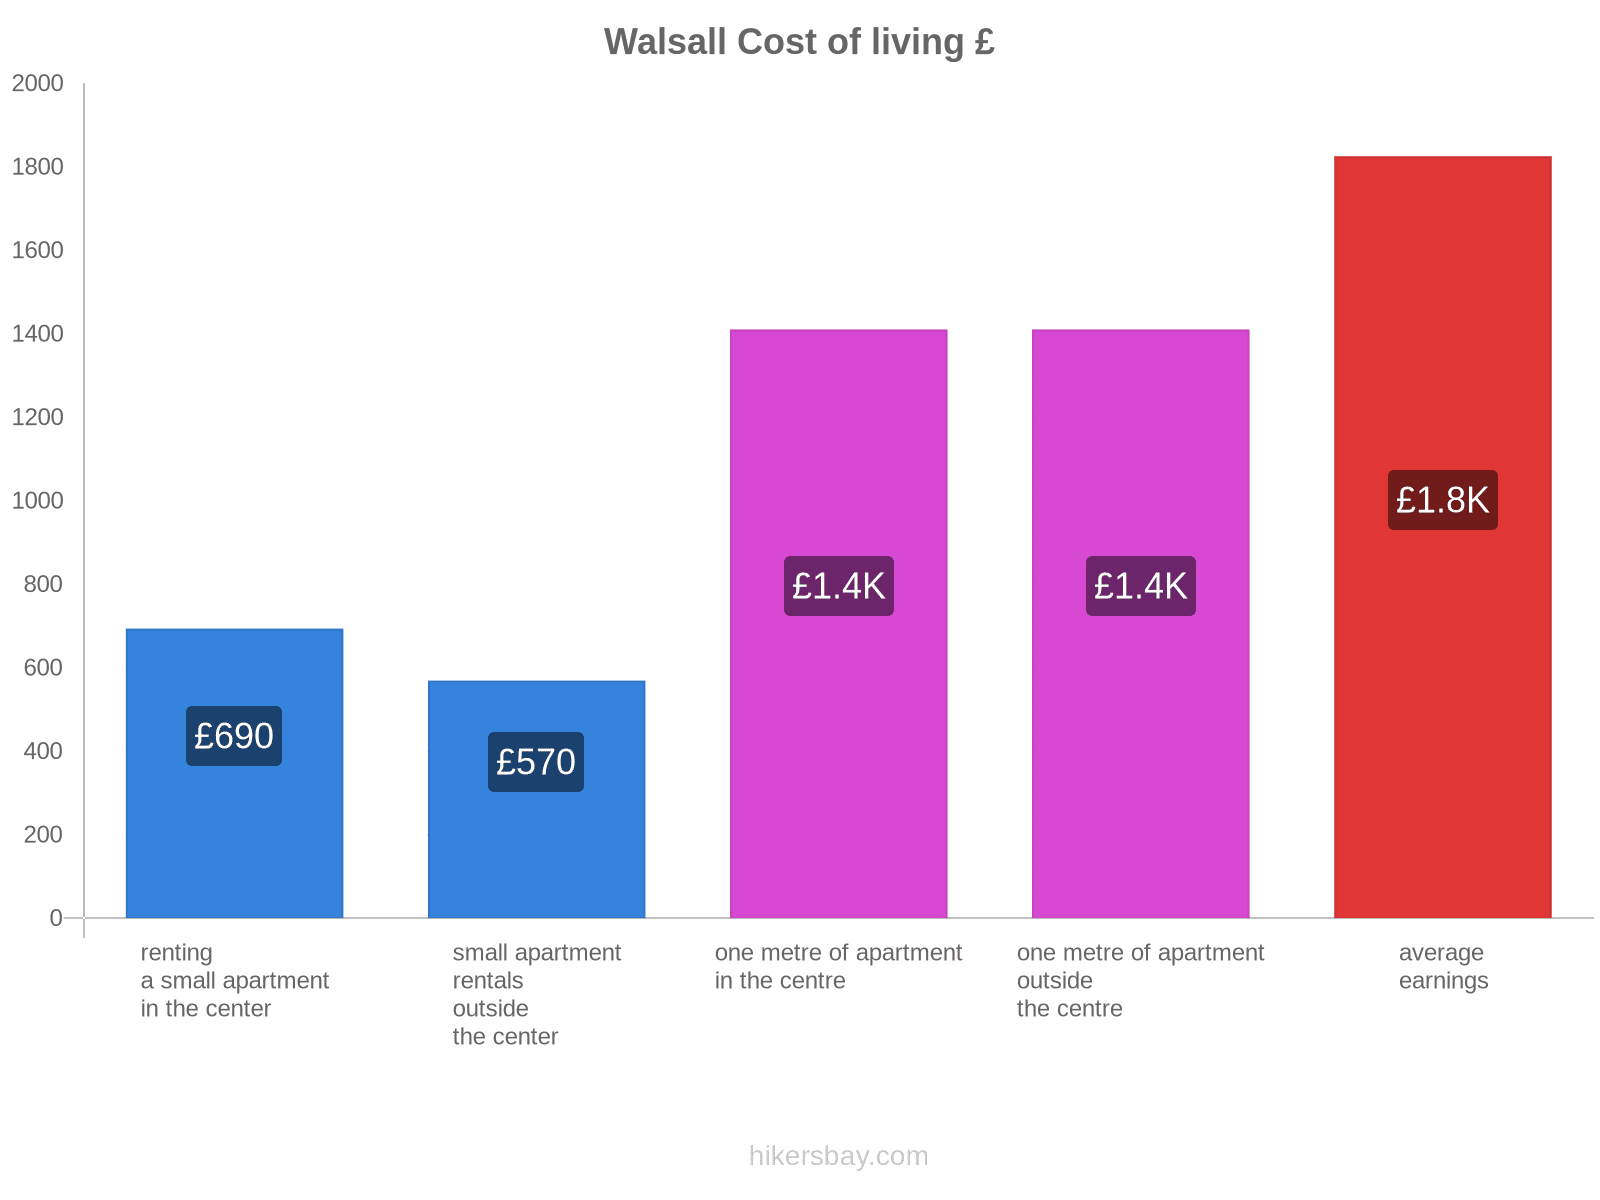 Walsall cost of living hikersbay.com